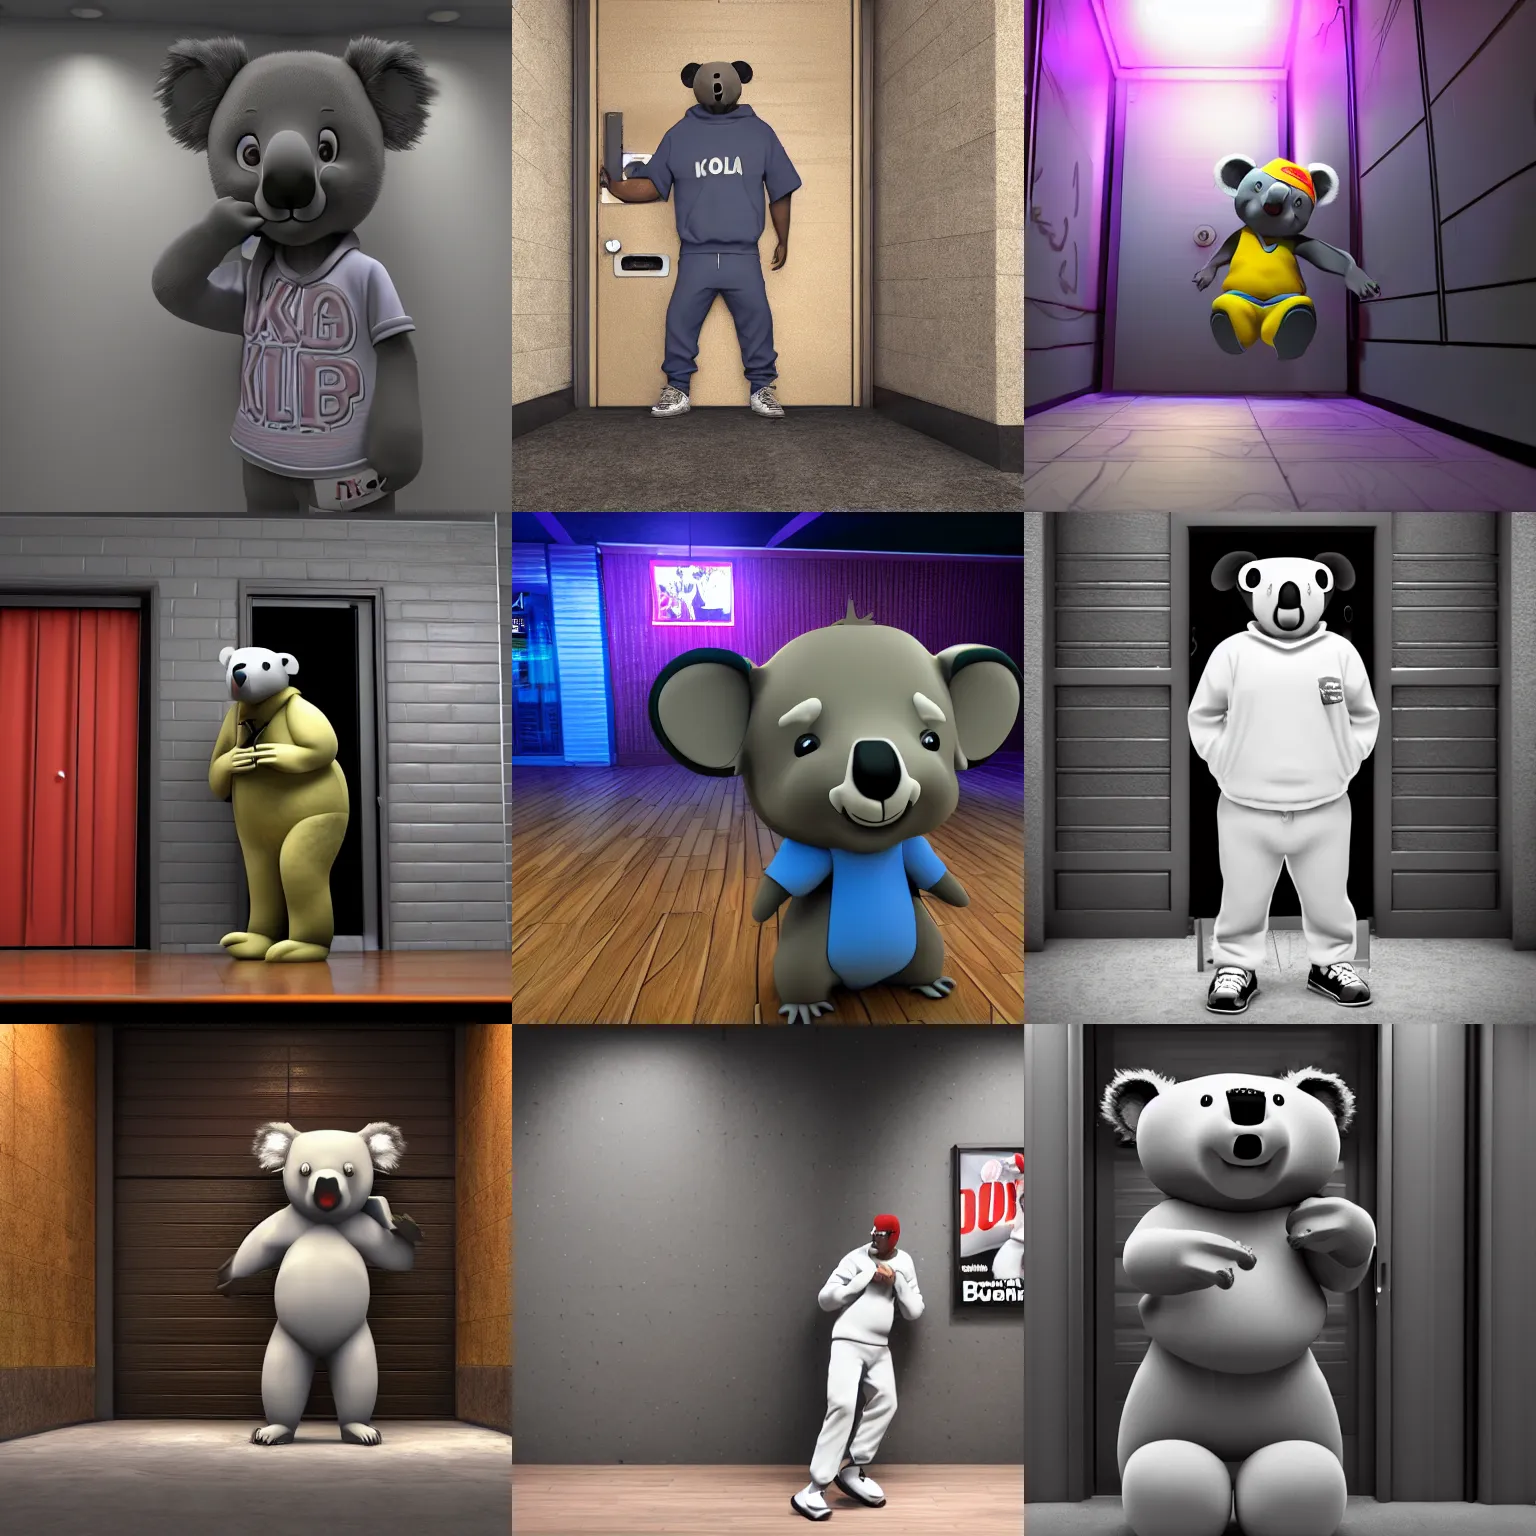 Prompt: 3 d cgi rendering of hiphop cartoon koala bouncer standing outside nightclub door at midnight, high resolution, depth of field